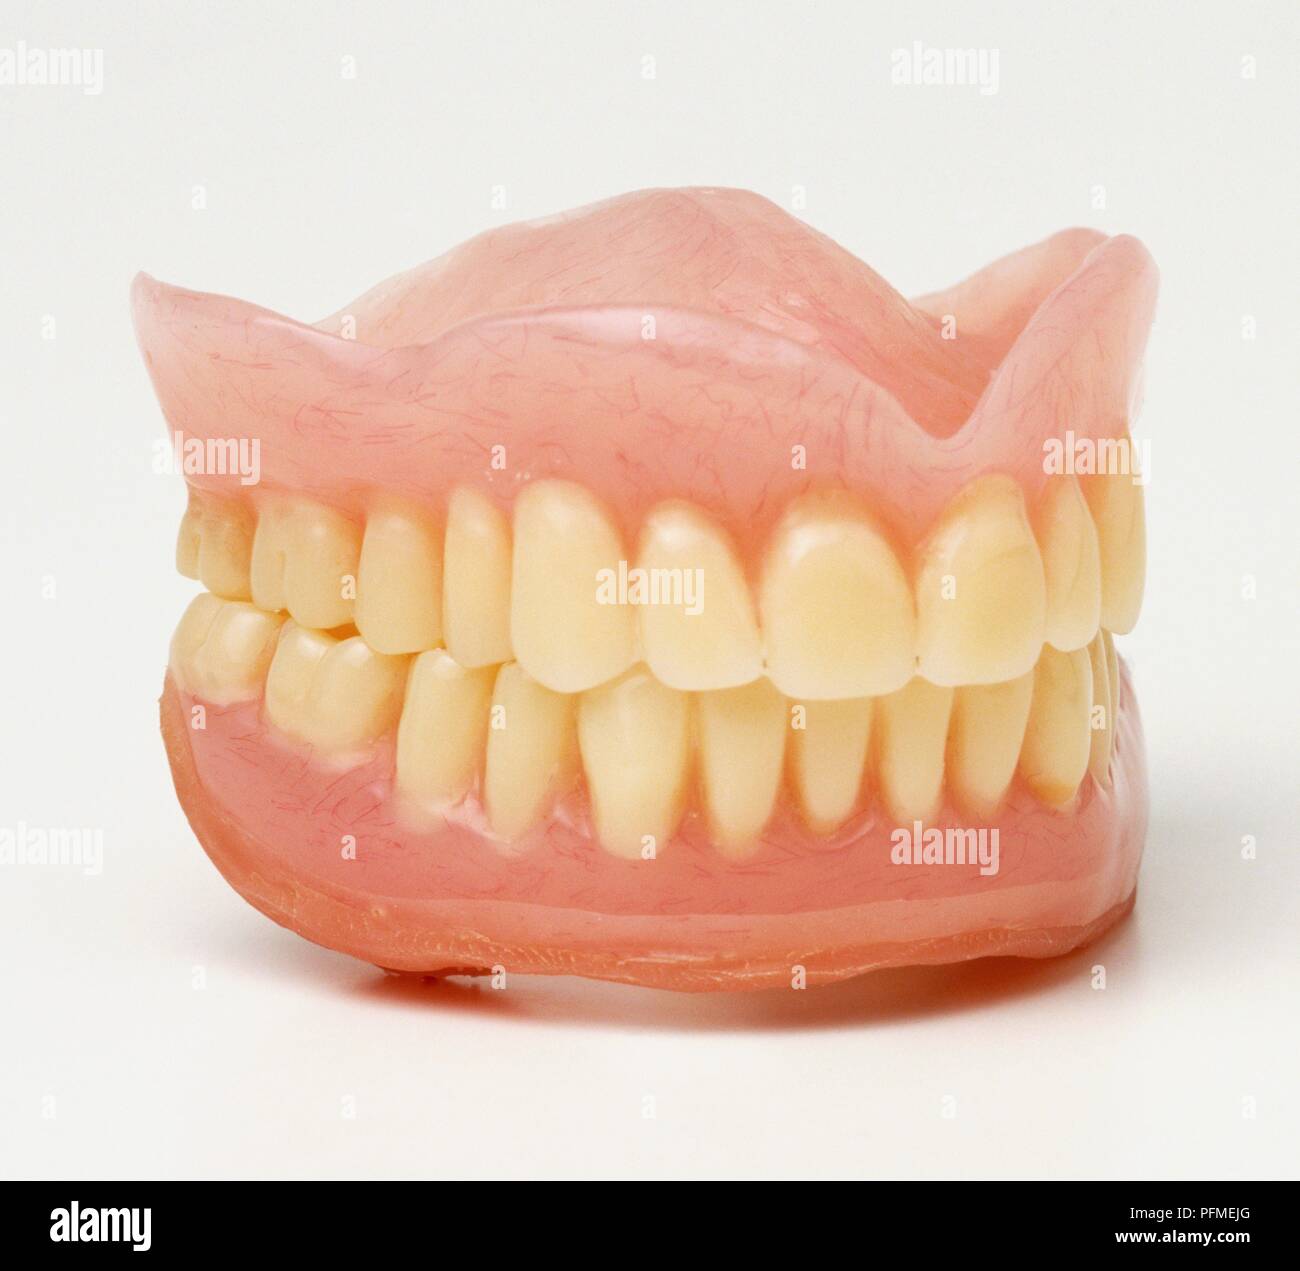 Set of false teeth, side view Stock Photo - Alamy